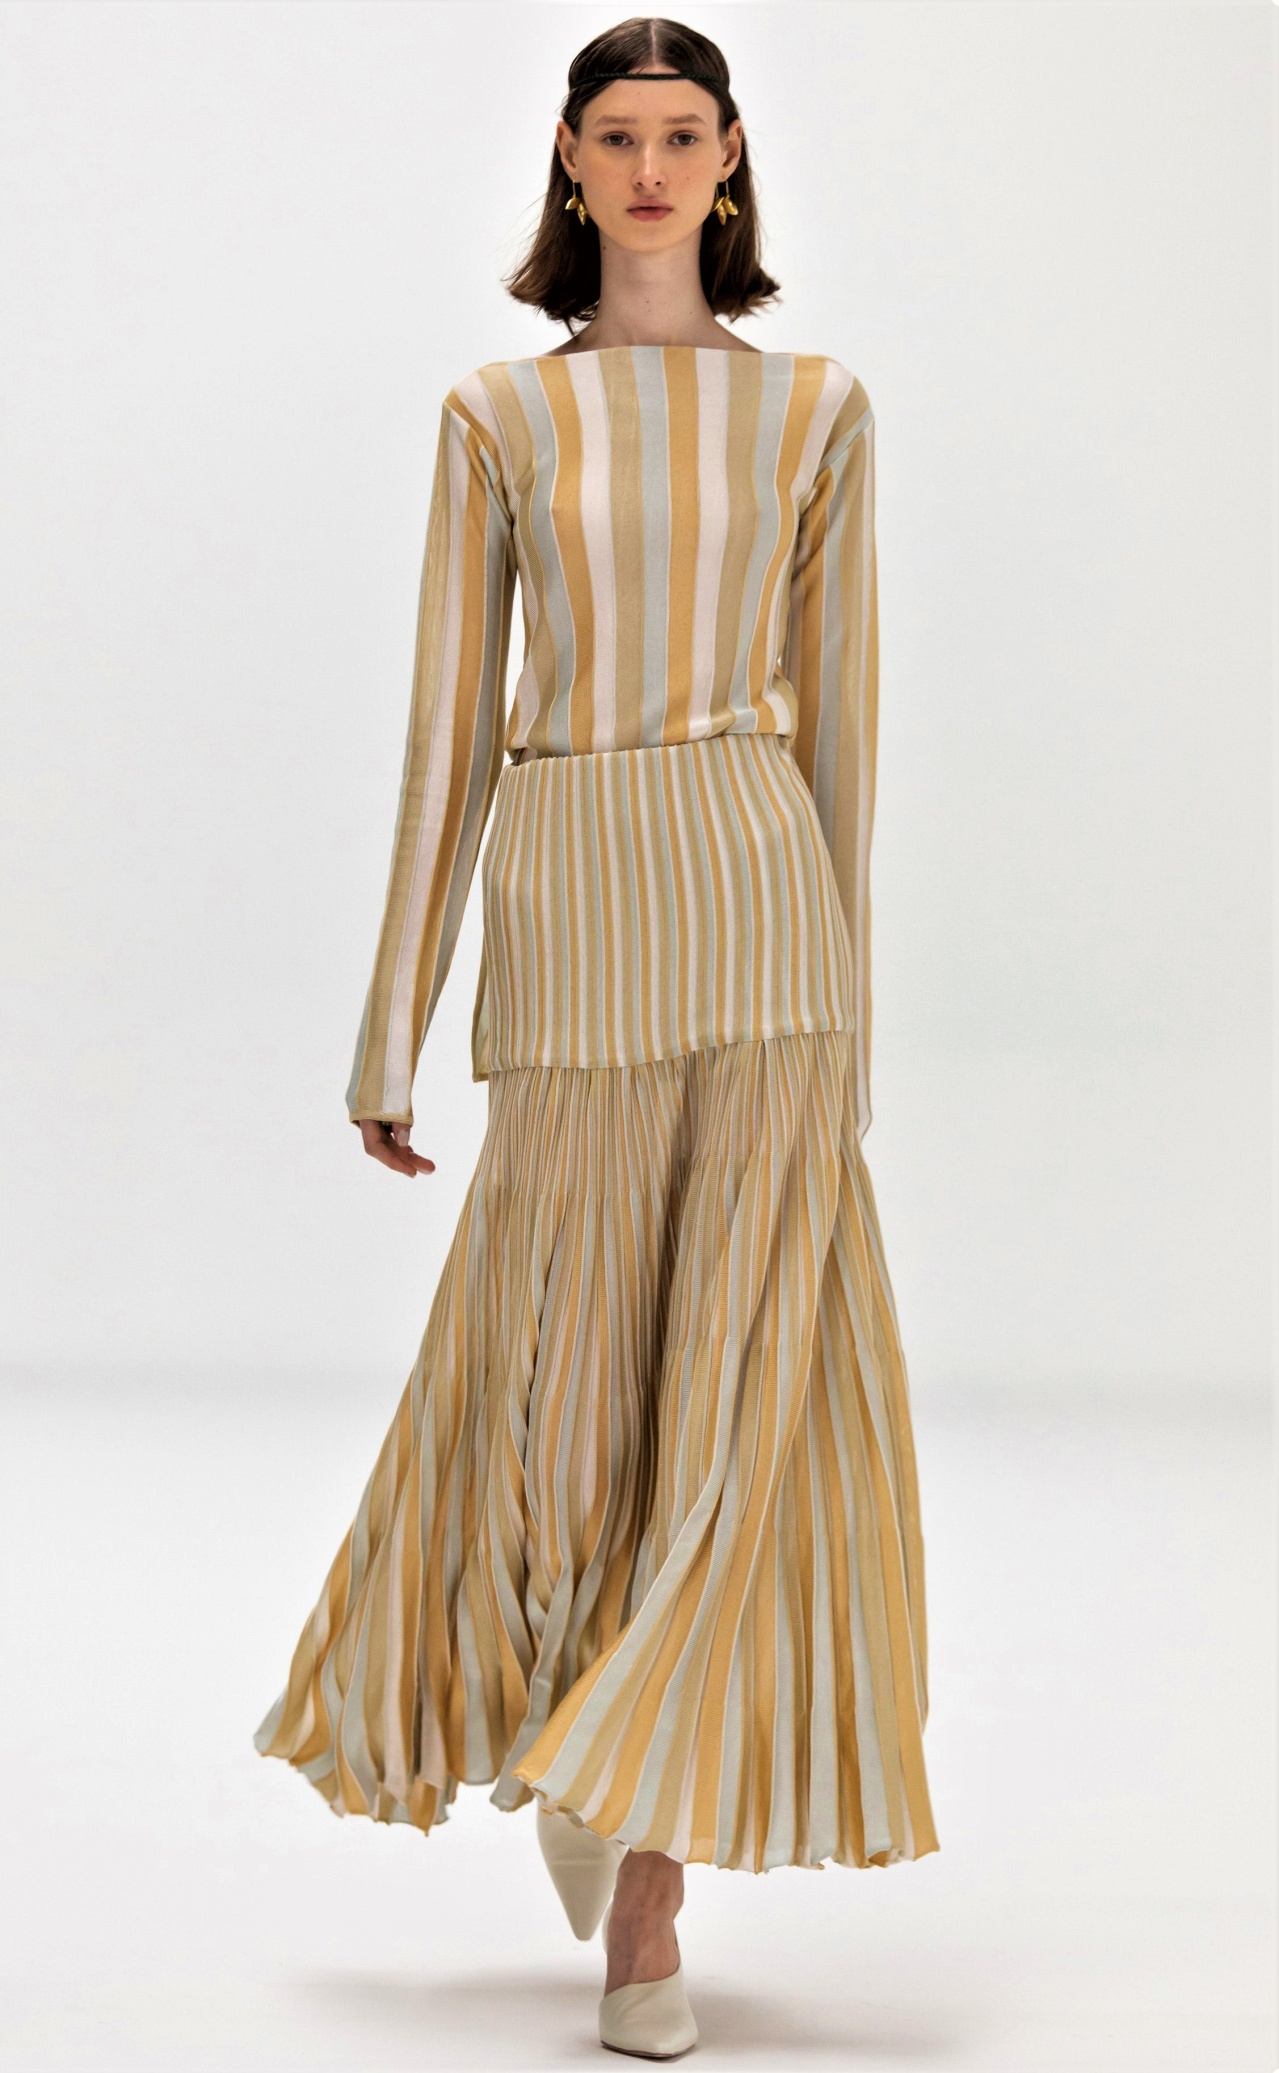 00013-Bevza-Fall-21 NYFW 3 cream beige stripe skirt vogue cropped .jpg